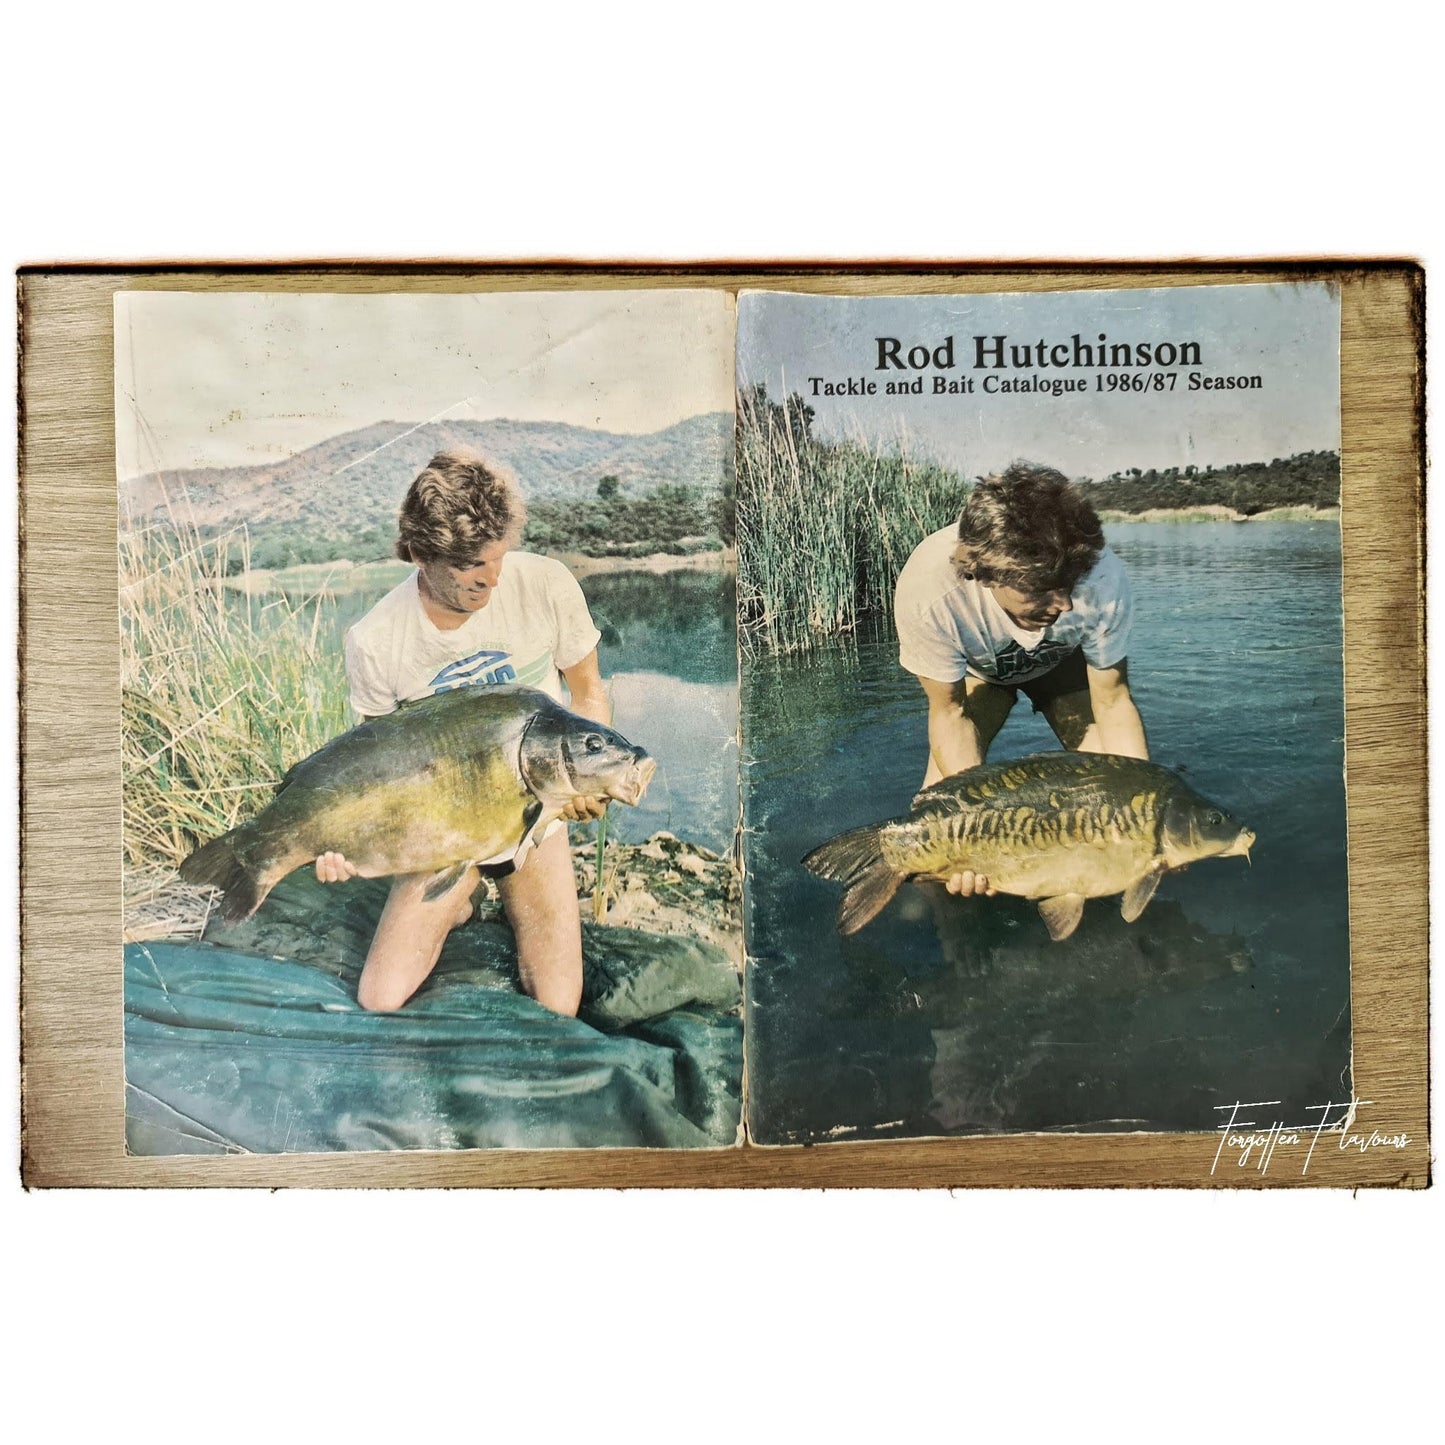 Rod Hutchinson tackle & bait catalogue 1986/87